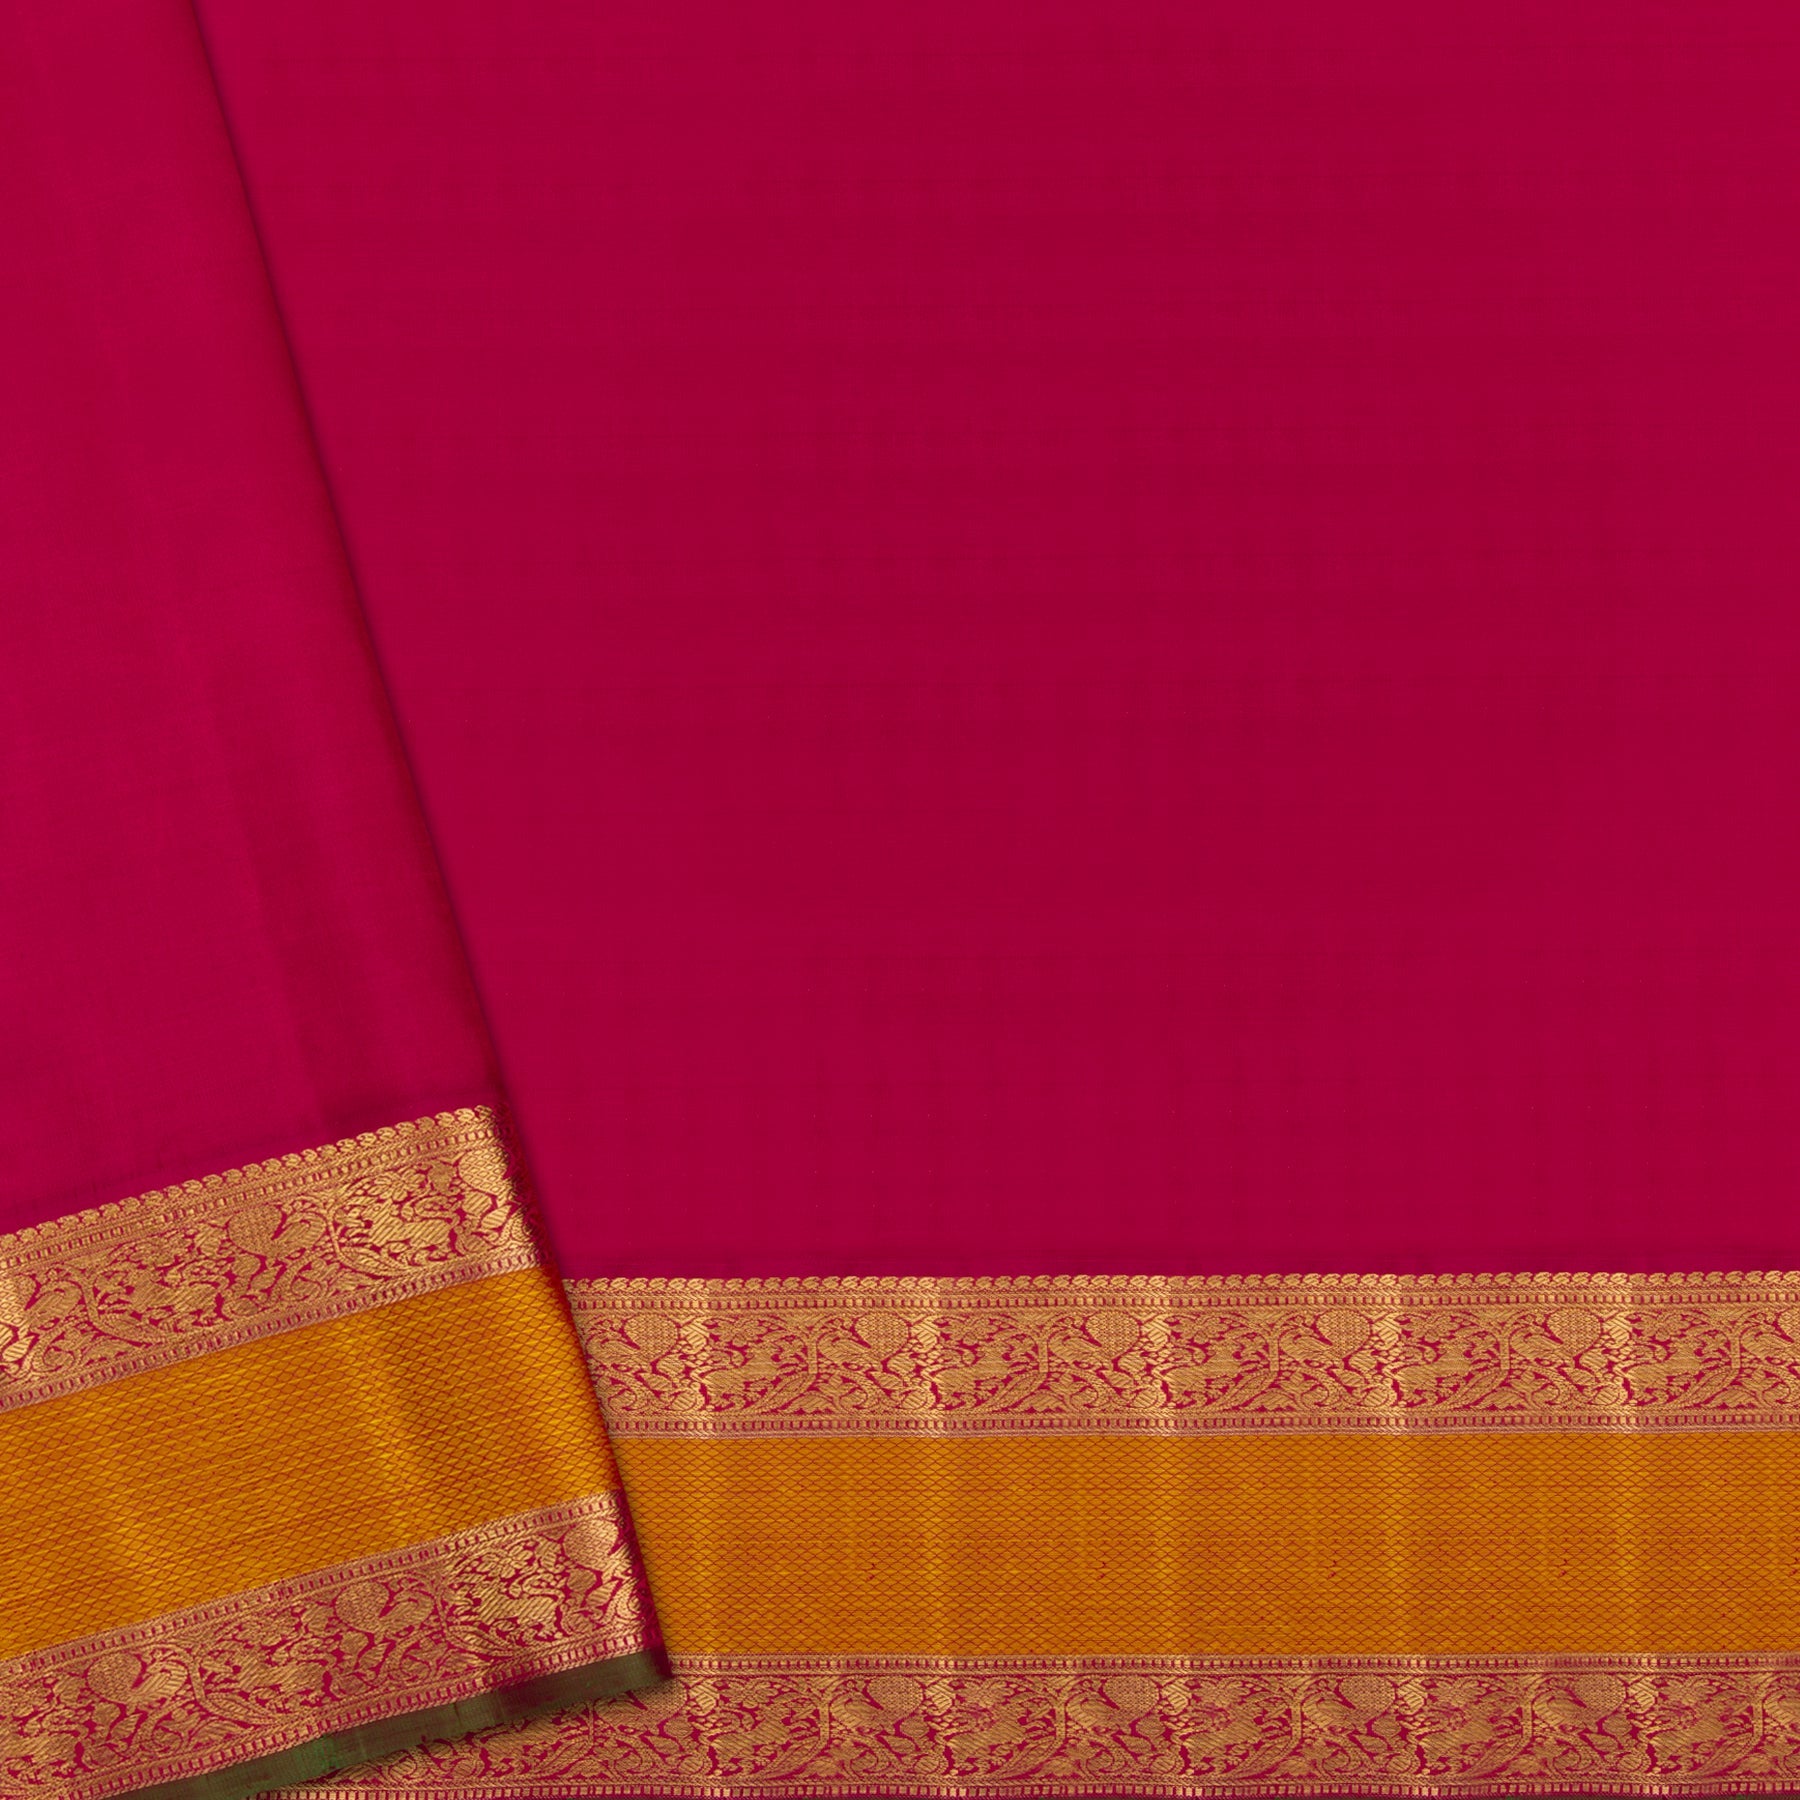 Kanakavalli Kanjivaram Silk Sari 23-110-HS001-07026 - Blouse View